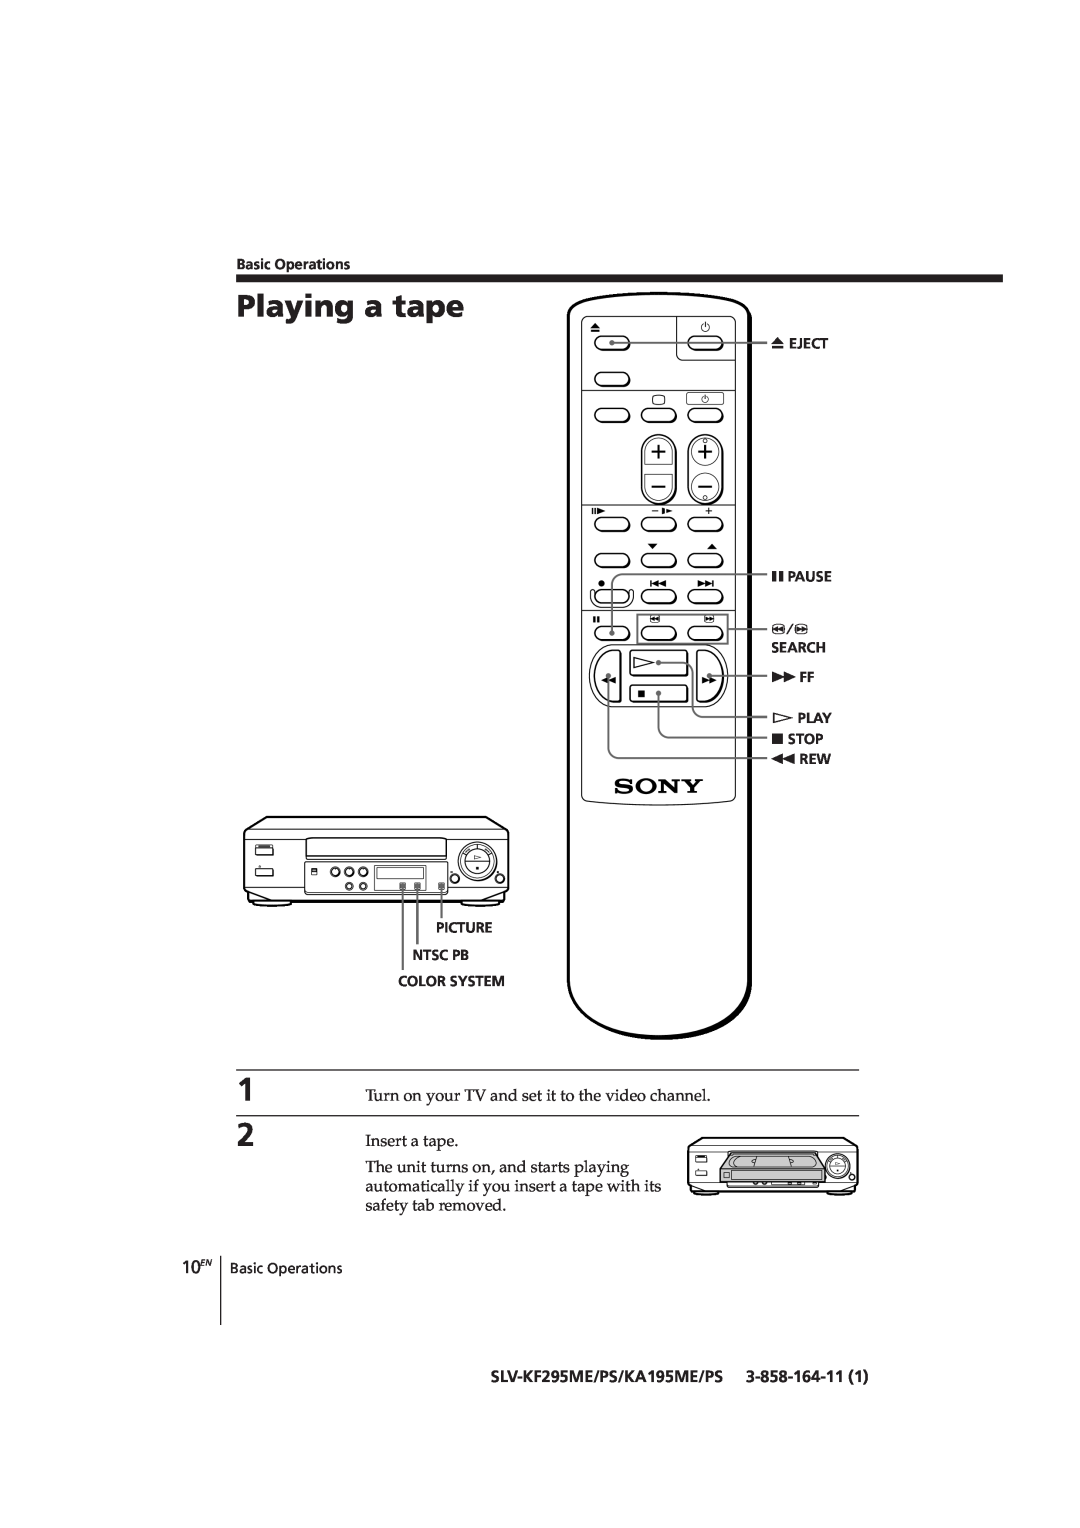 Sony SLV-KF295CH, SLV-KA195CH manual Playing a tape, 10EN, SLV-KF295ME/PS/KA195ME/PS, Basic Operations 